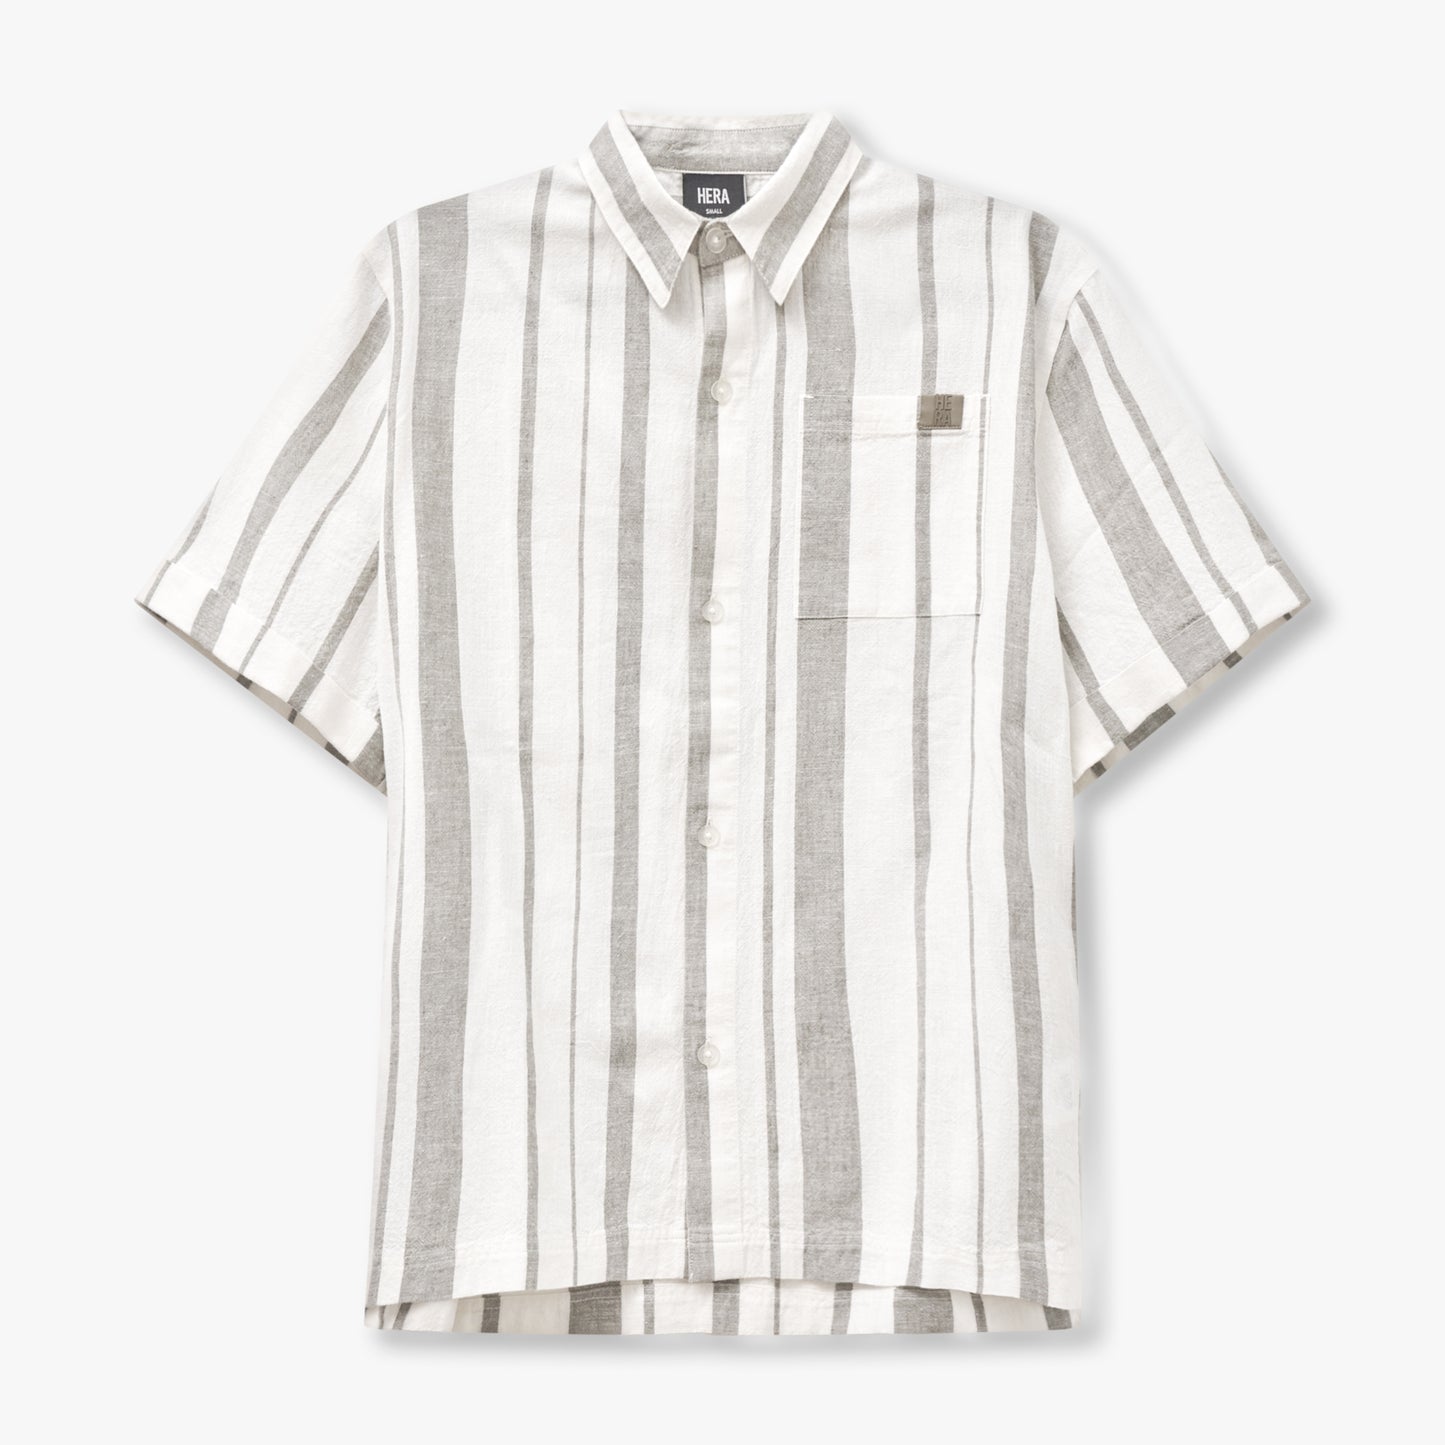 Mens Linen Mix Shirt - Off White & Grey Green Stripe